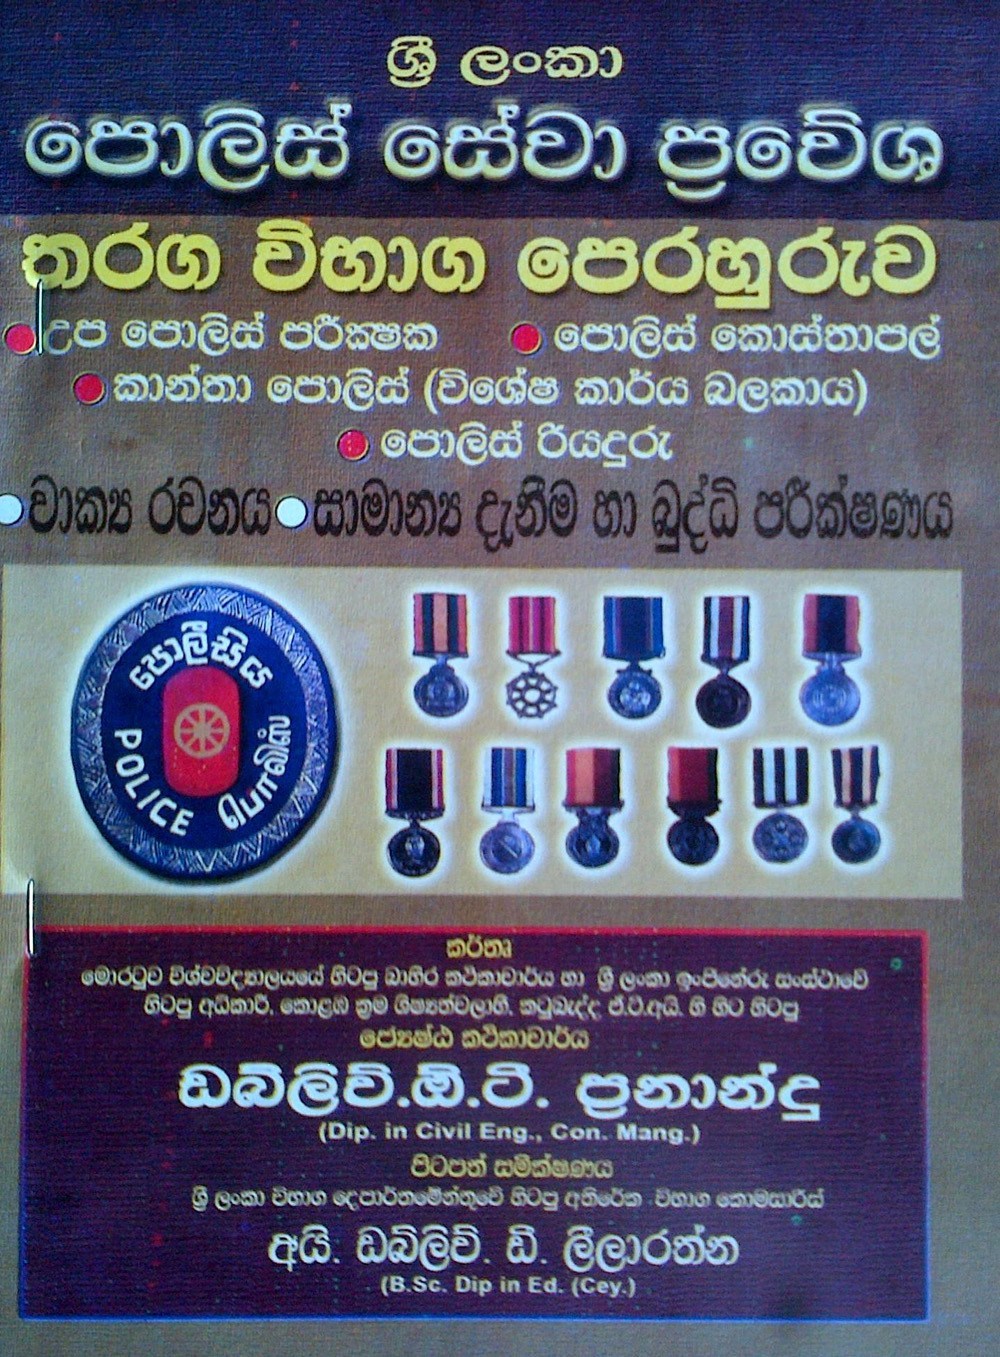 Sri lanka Police Sewa pravesha tharanga vibaga perahuruwa